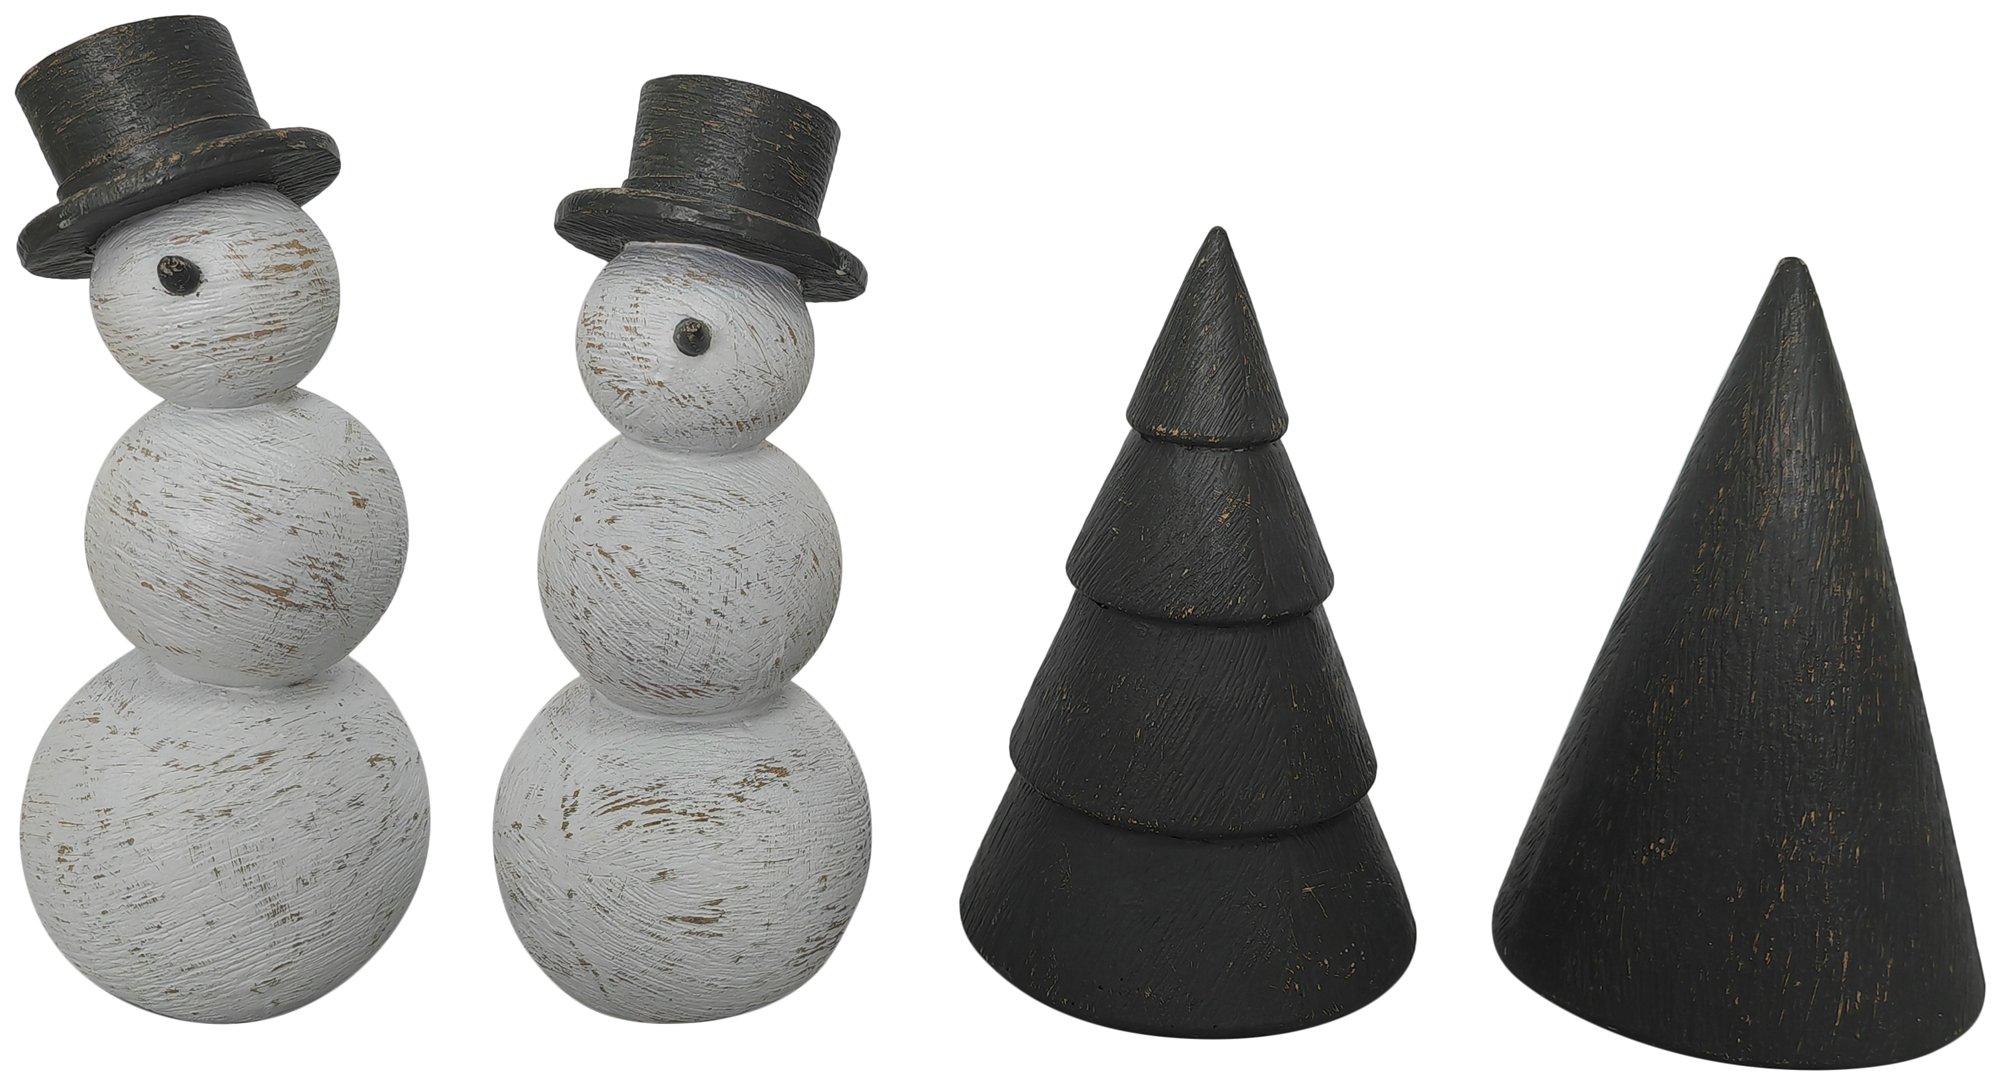 https://images.beallsflorida.com/i/beallsflorida/689-2745-6613-00-yyy/*4-Pc.-Snowman-&-Christmas-Tree-Tabletop-Decor*?$product$&fmt=auto&qlt=default